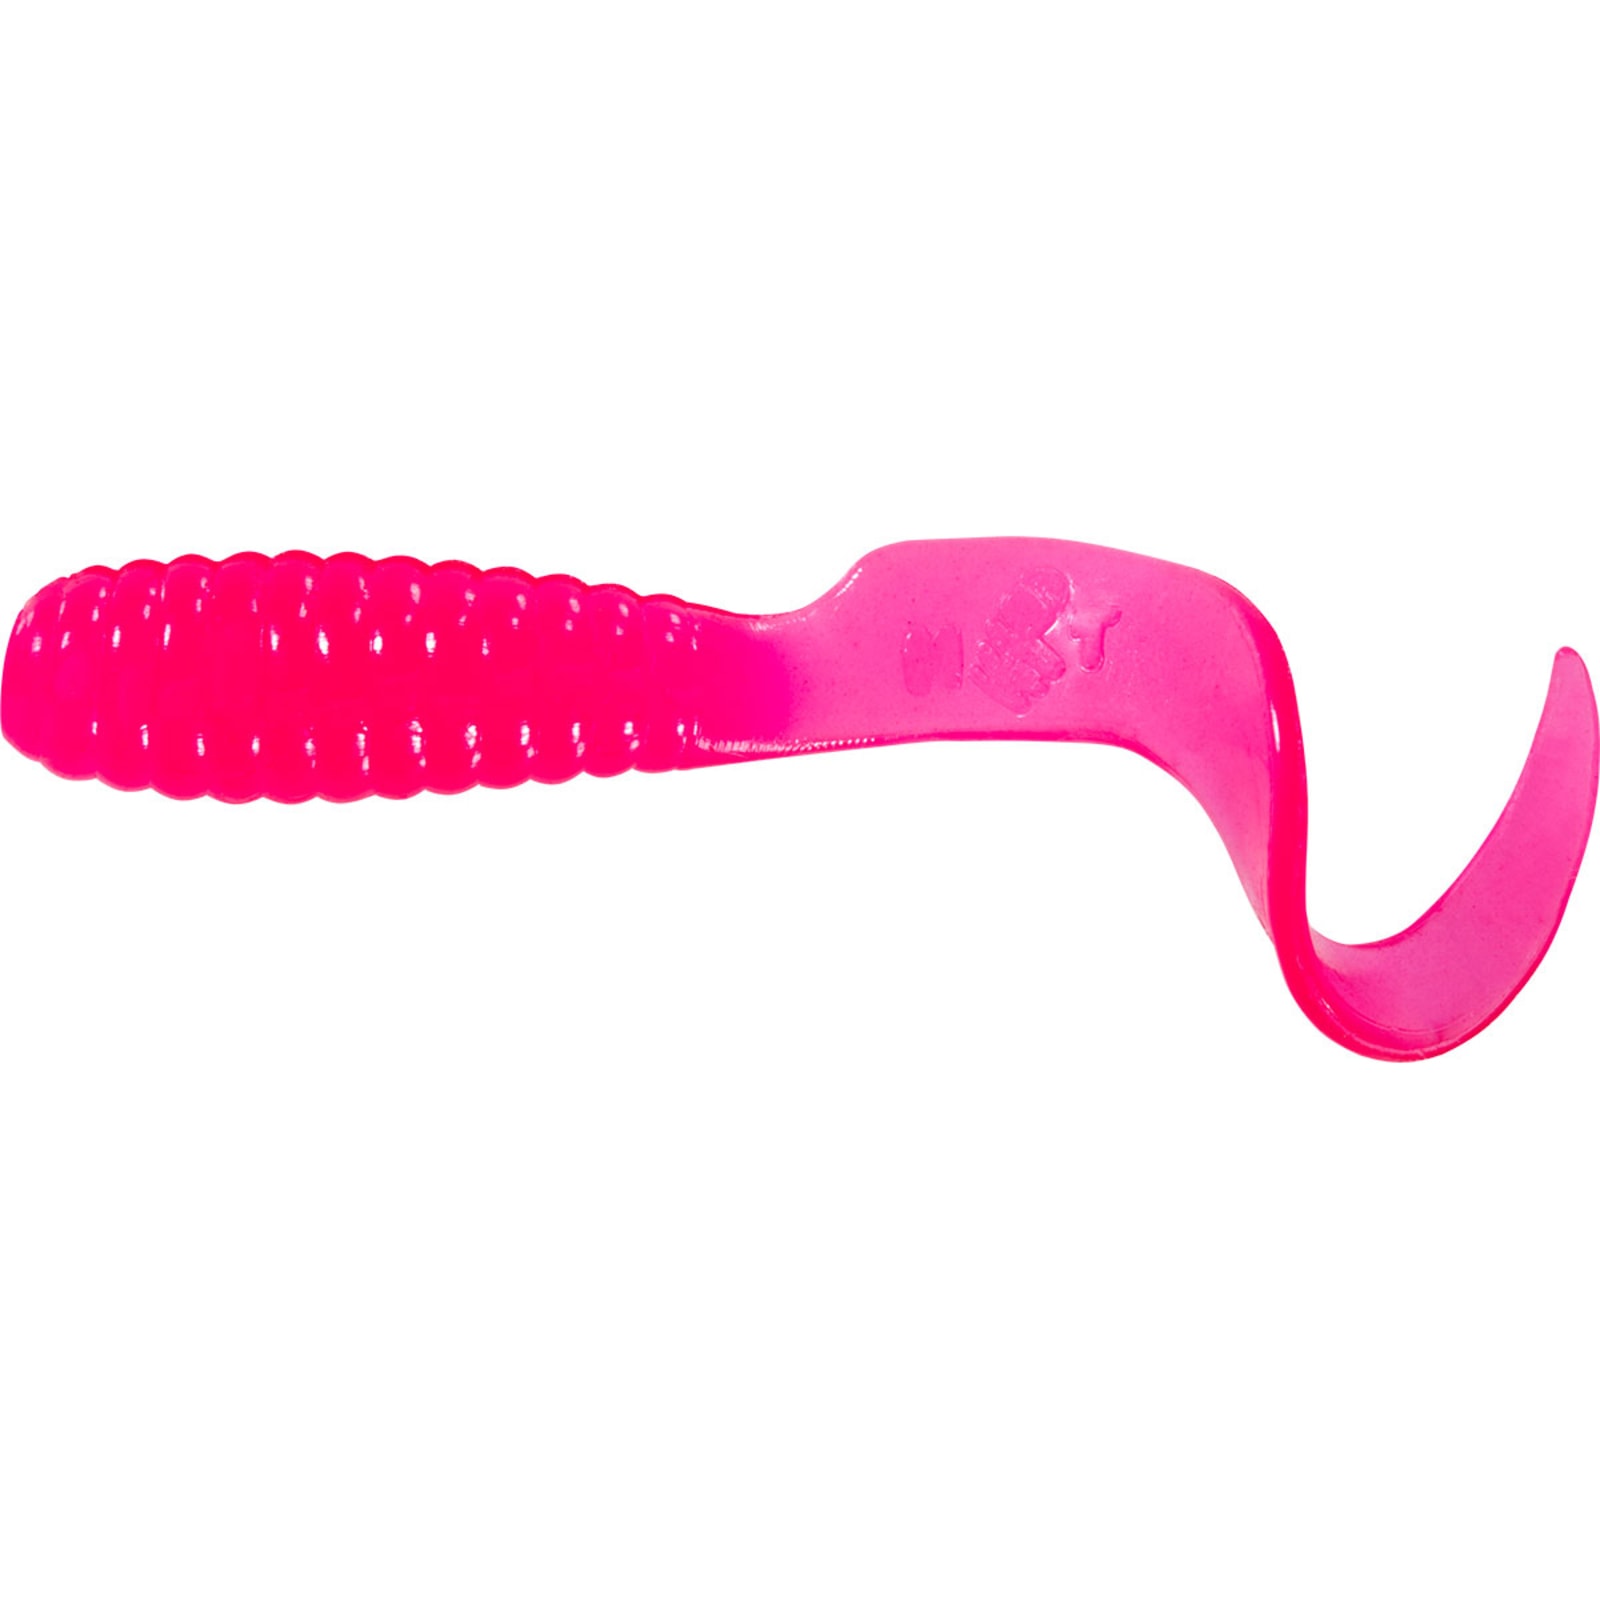 Curly Tail Teenie Grub - Pink by Mister Twister at Fleet Farm